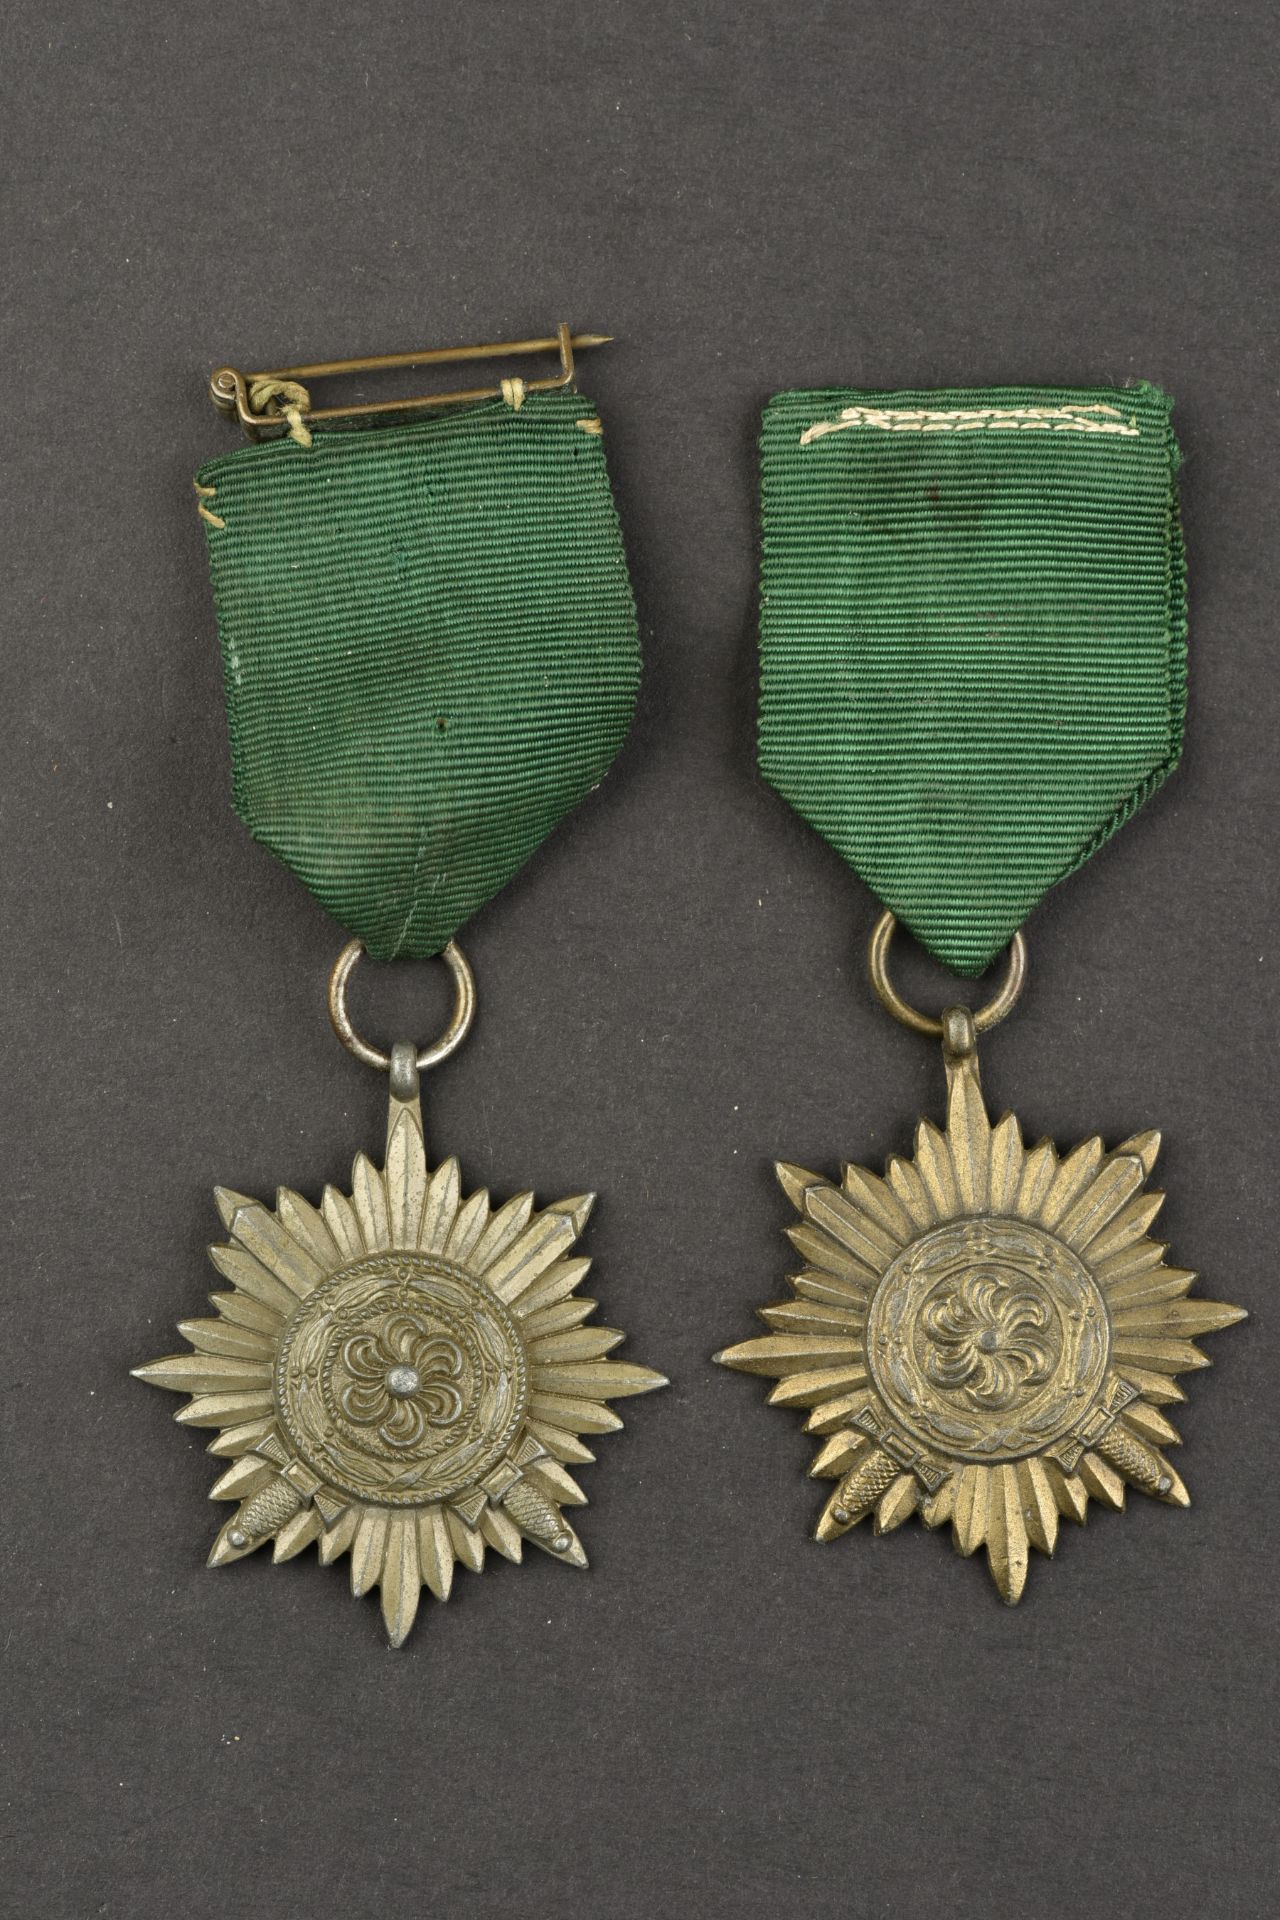 Medailles des volontaires de l Est. Eastern volunteers  medals.